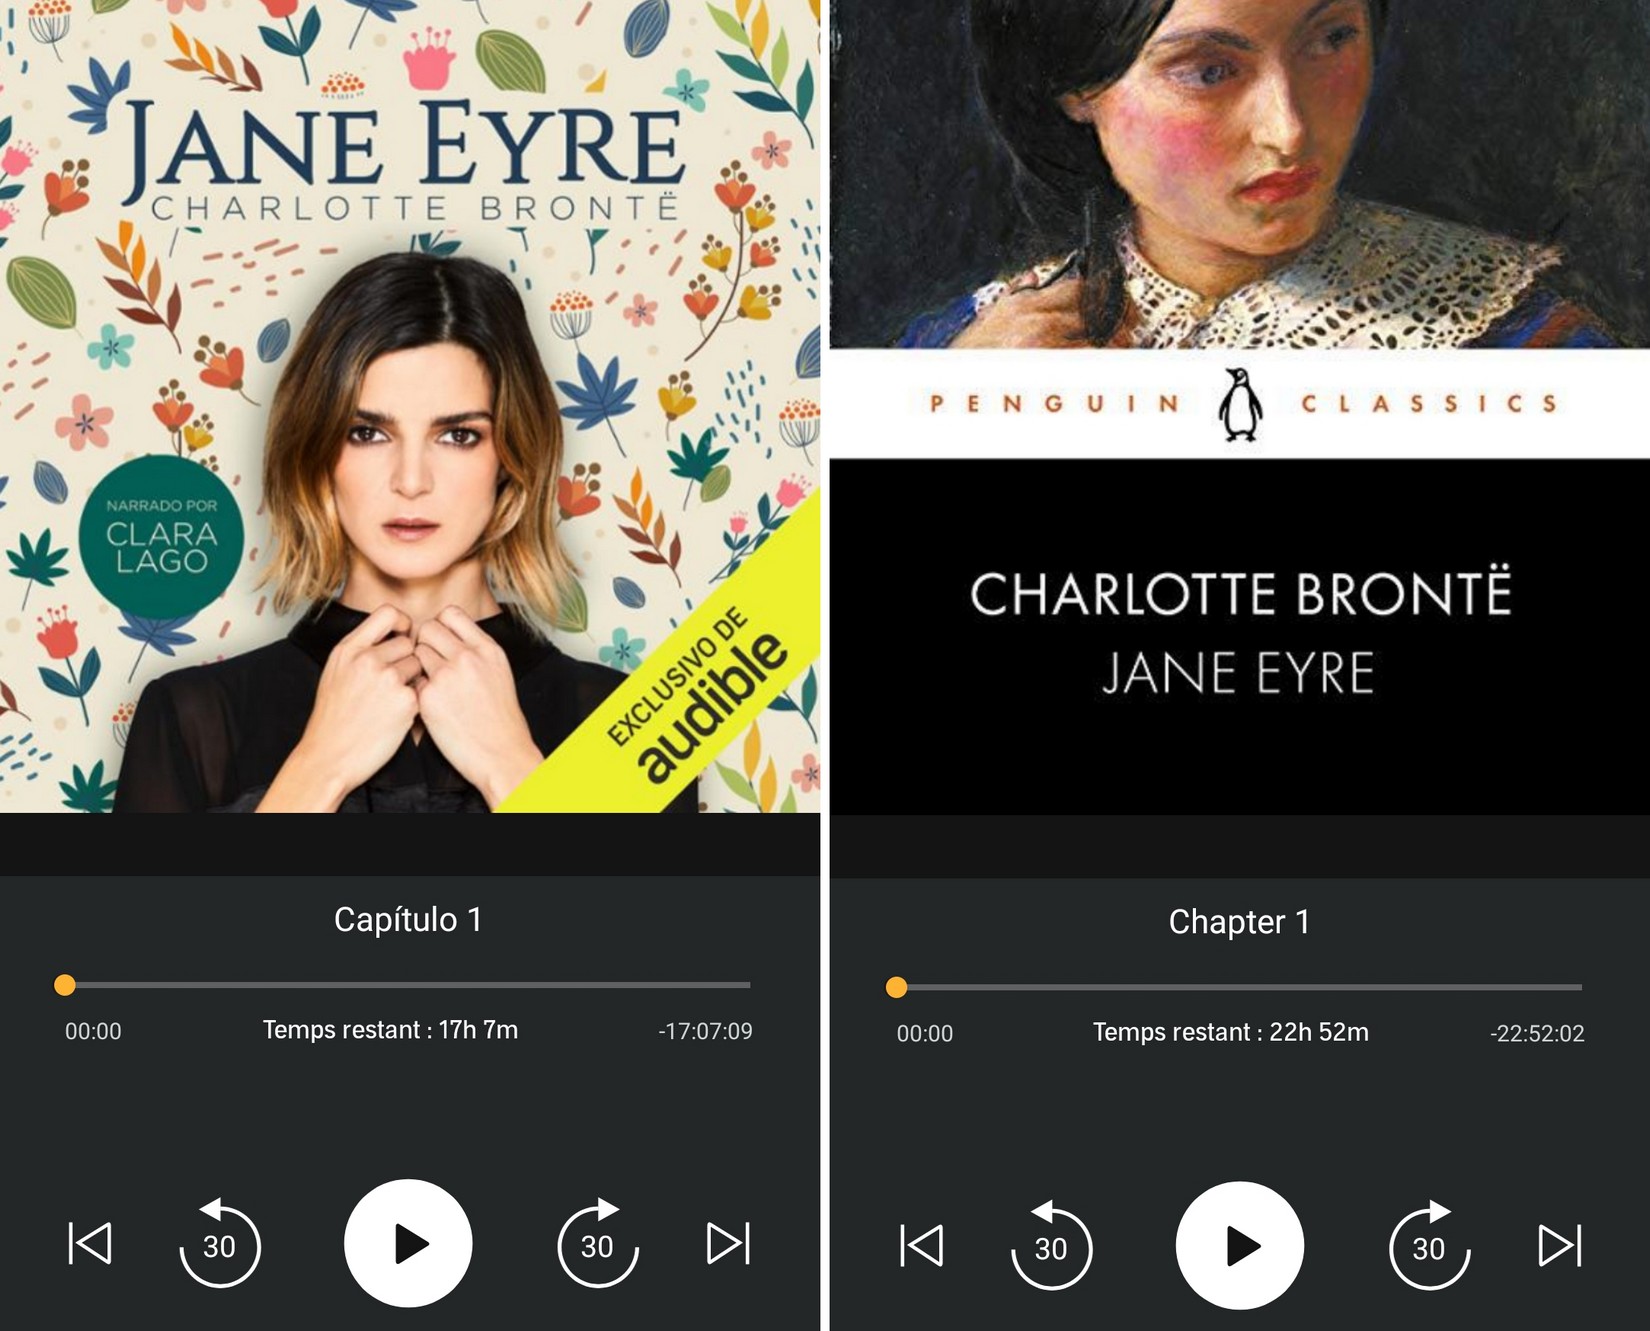 Audiobook / Livre audio : Charlotte Brontë, Jane Eyre. Lu par Anna Popplewell (anglais), Clara Lago (espagnol)